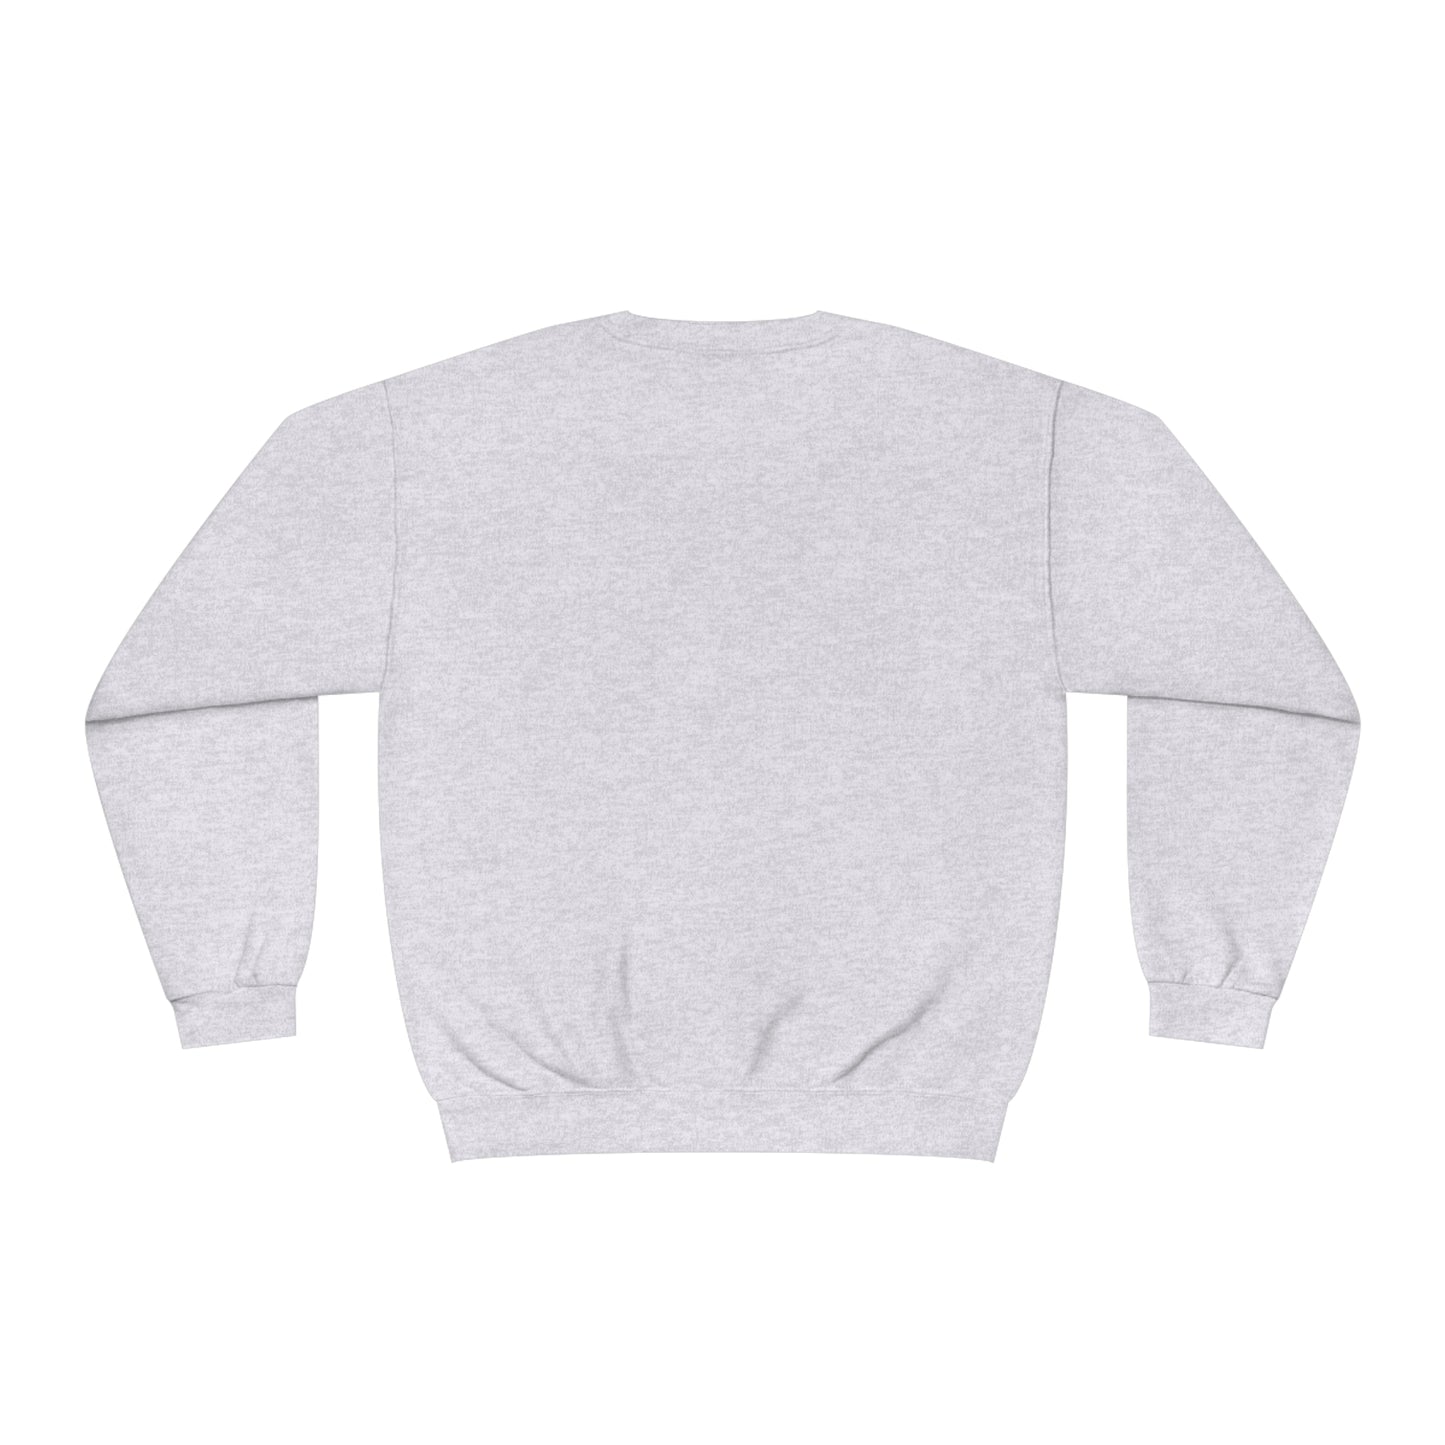 Space Love - Unisex NuBlend® Crewneck Sweatshirt